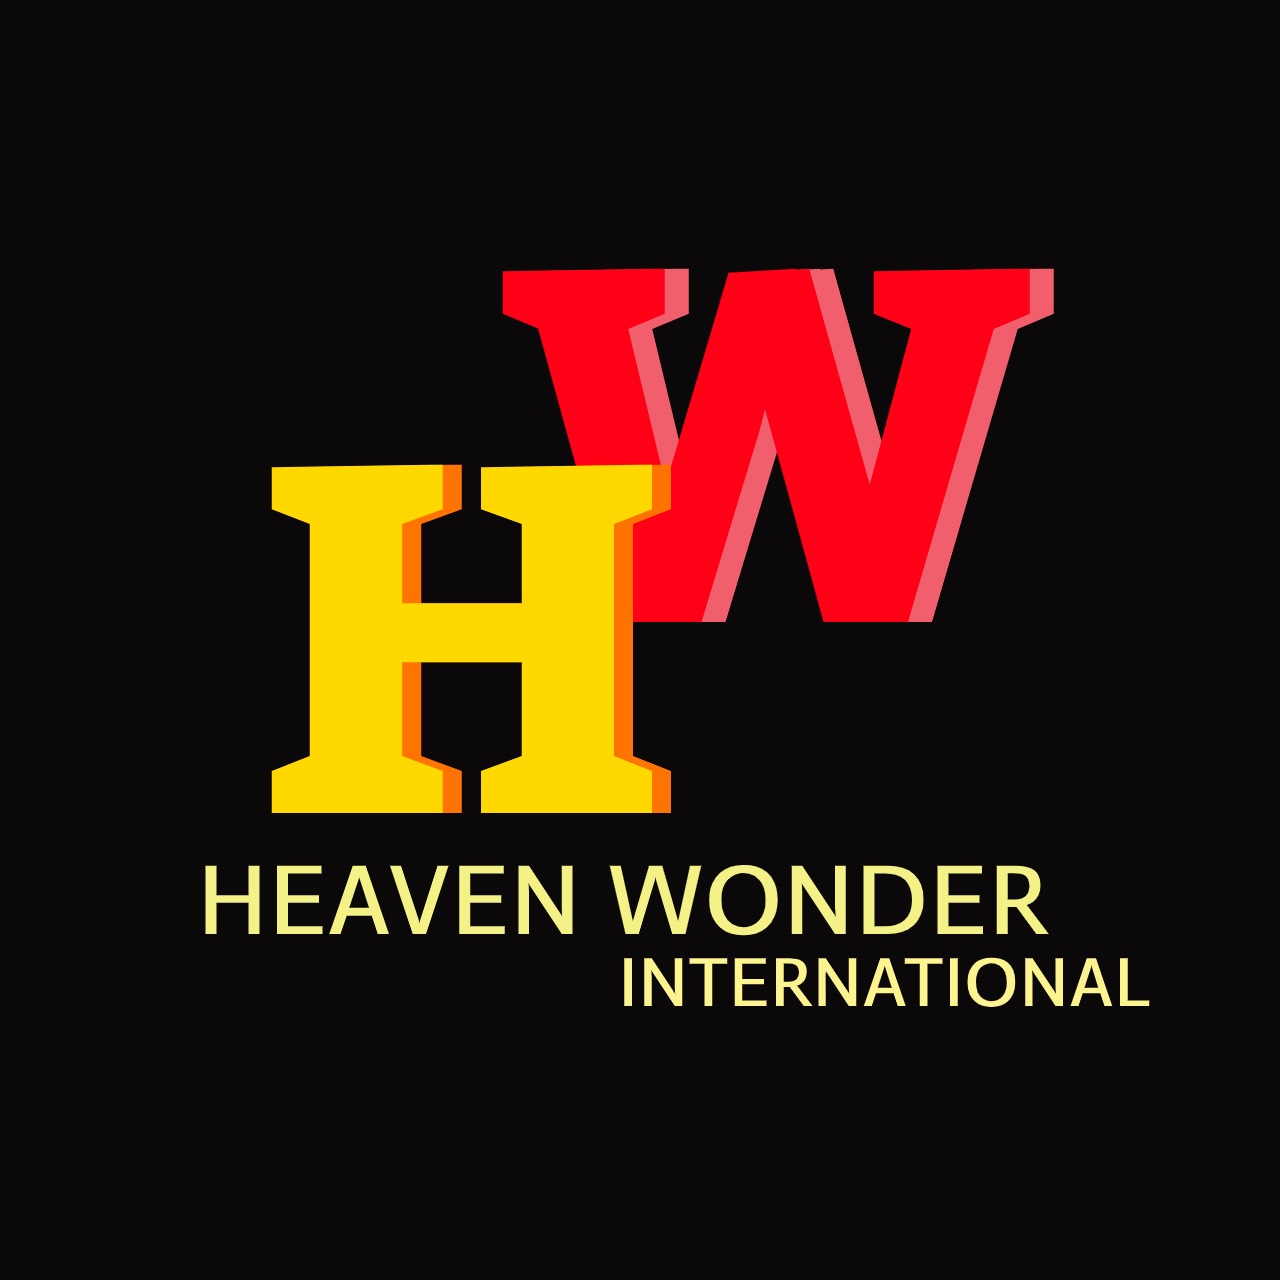 Heaven Wonder International logo โลโก้